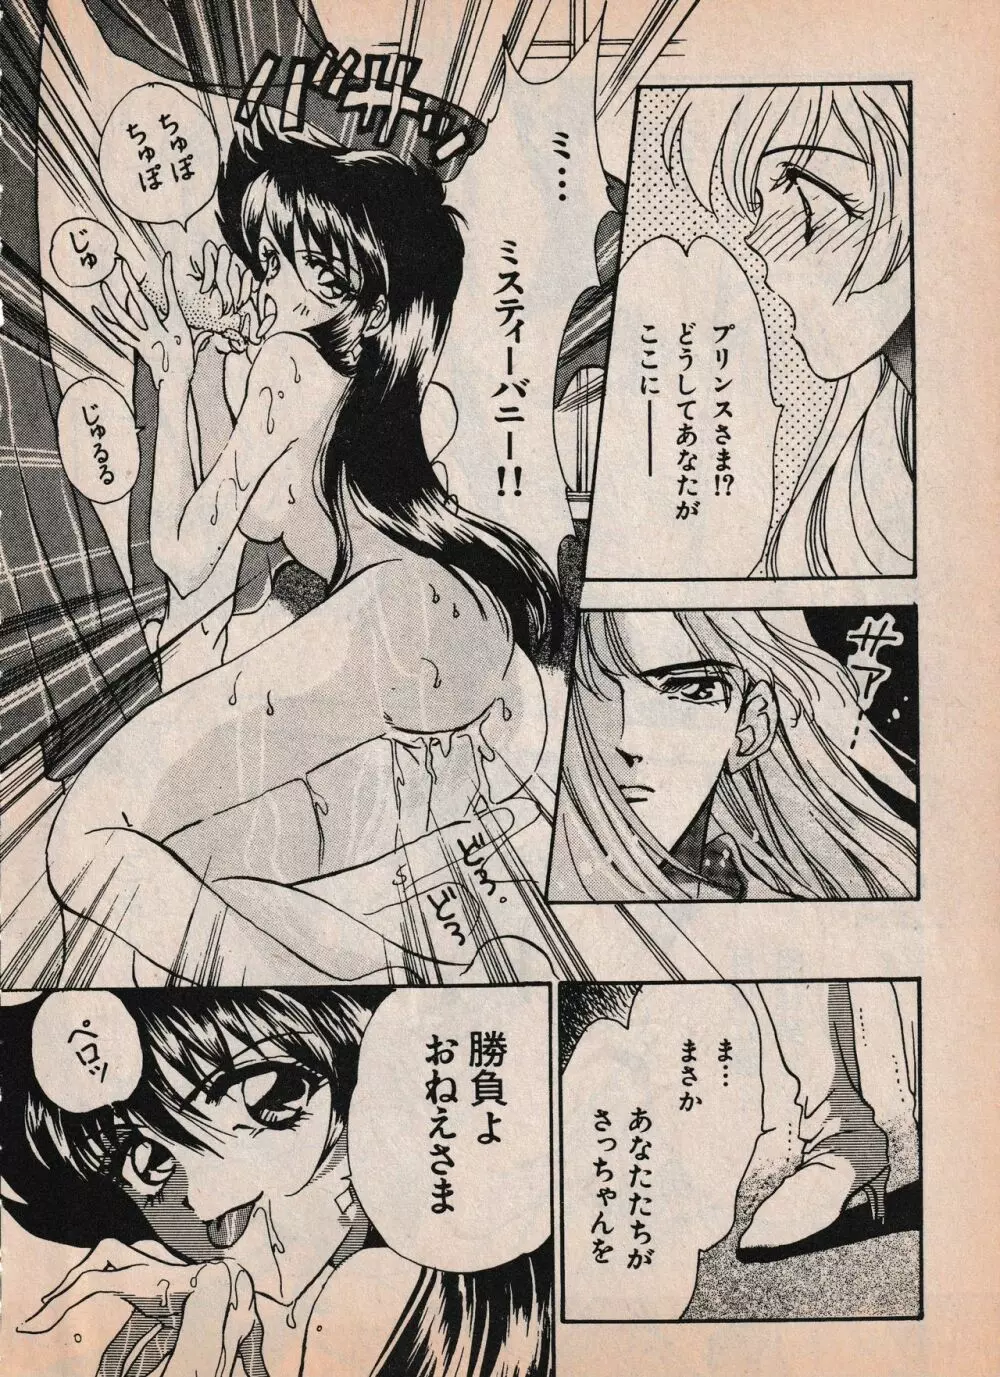 Sailor X vol. 4 - Sailor X vs. Cunty Horny! - page99